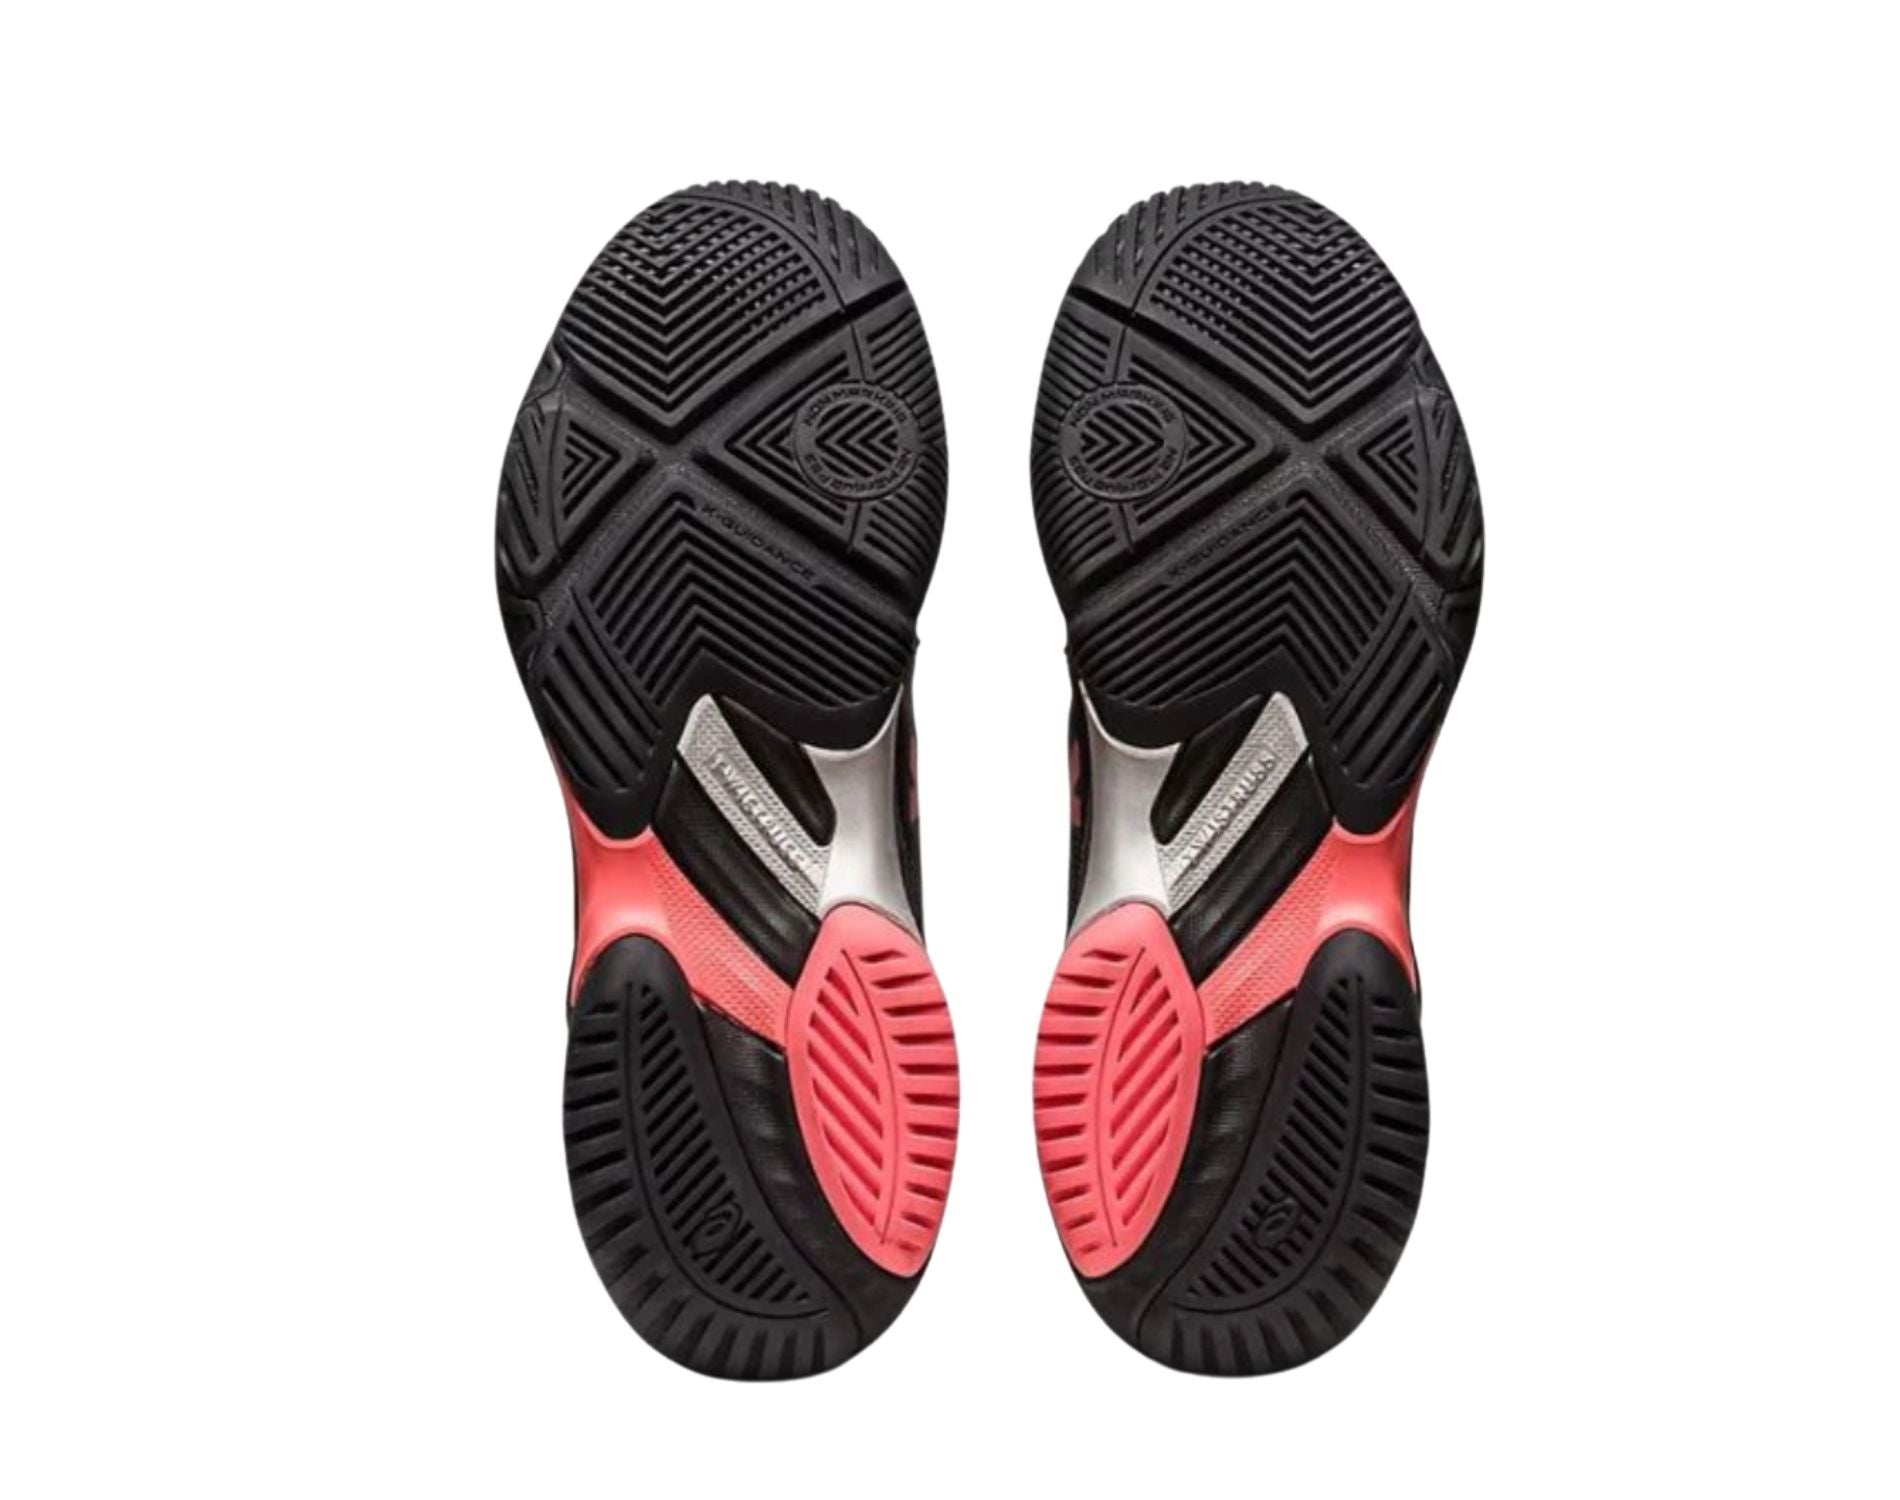 Asics Netburner Ballistic FF MT 3 womens netball shoe in b standard width in black and papaya colour